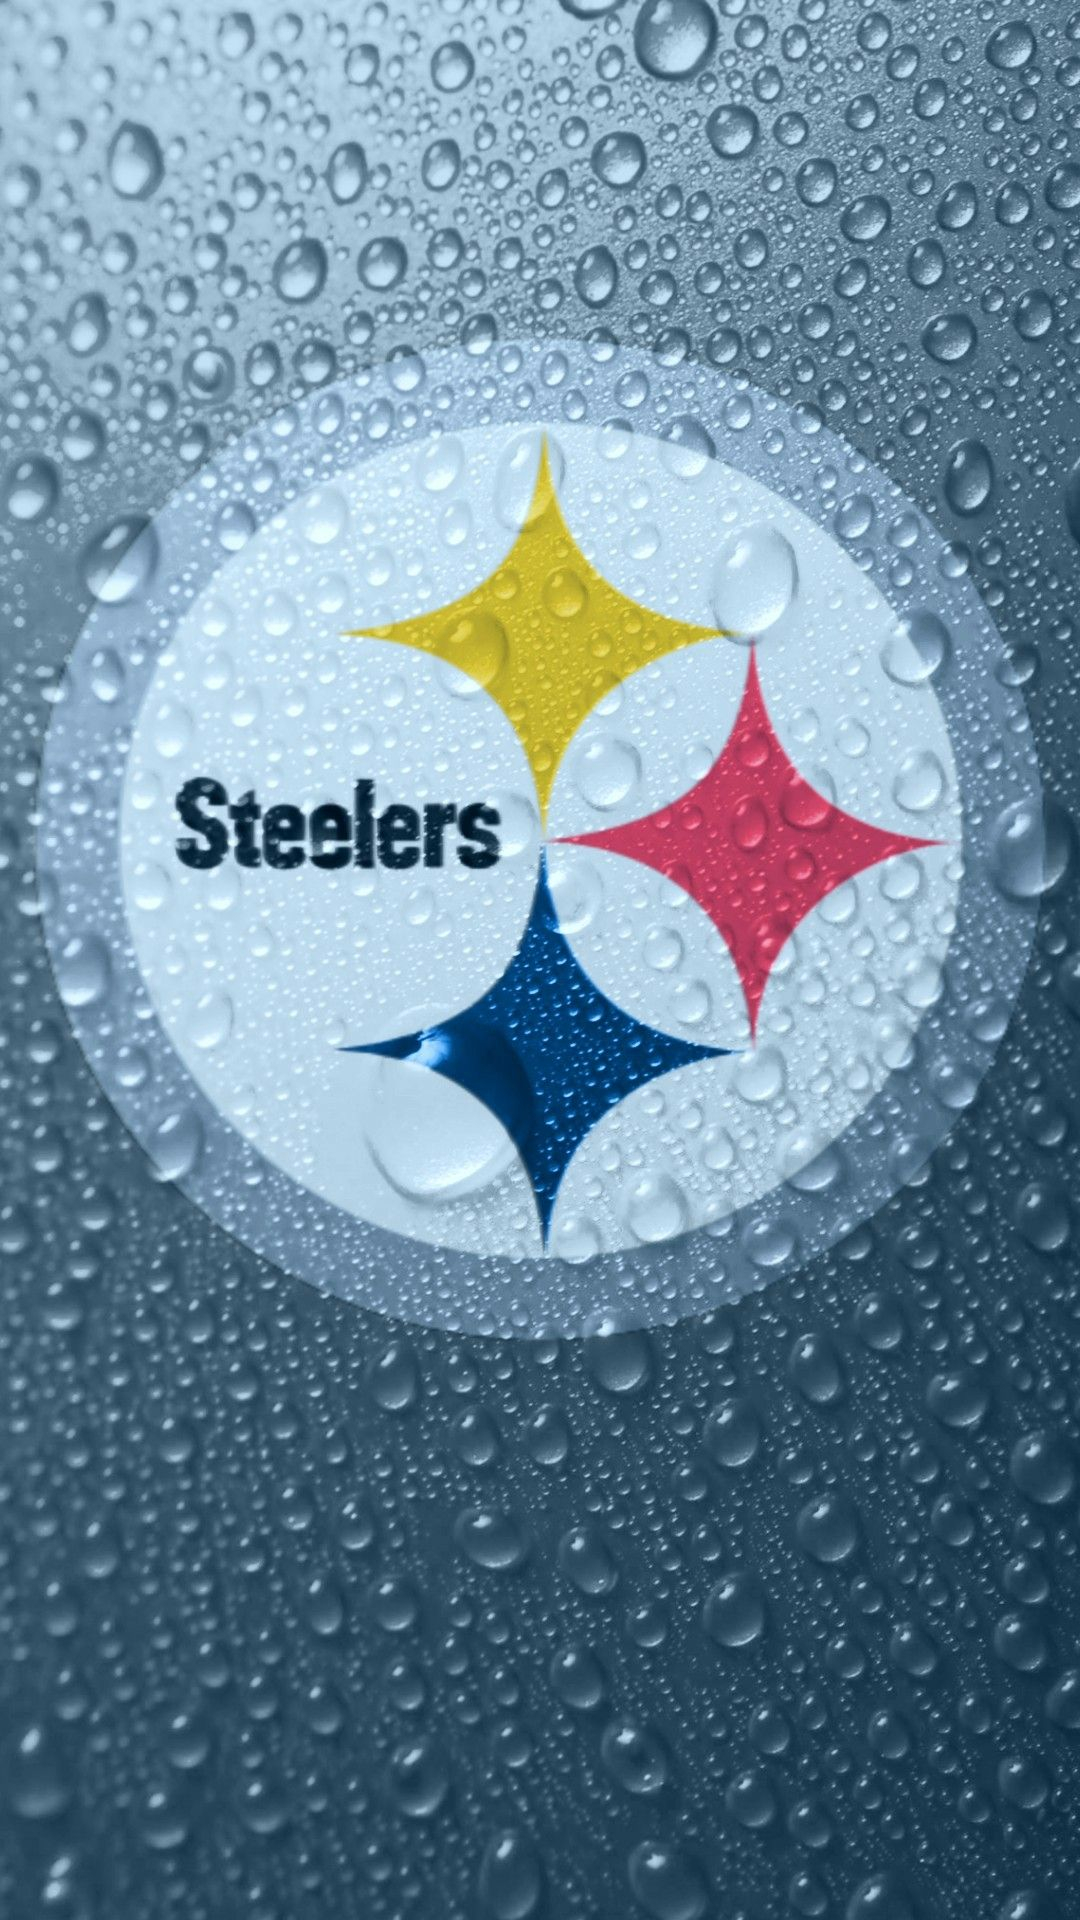 1080x1920 Pittsburgh Steelers Wallpaper | Pittsburgh steelers wallpaper, Steelers, Pittsburgh steelers football